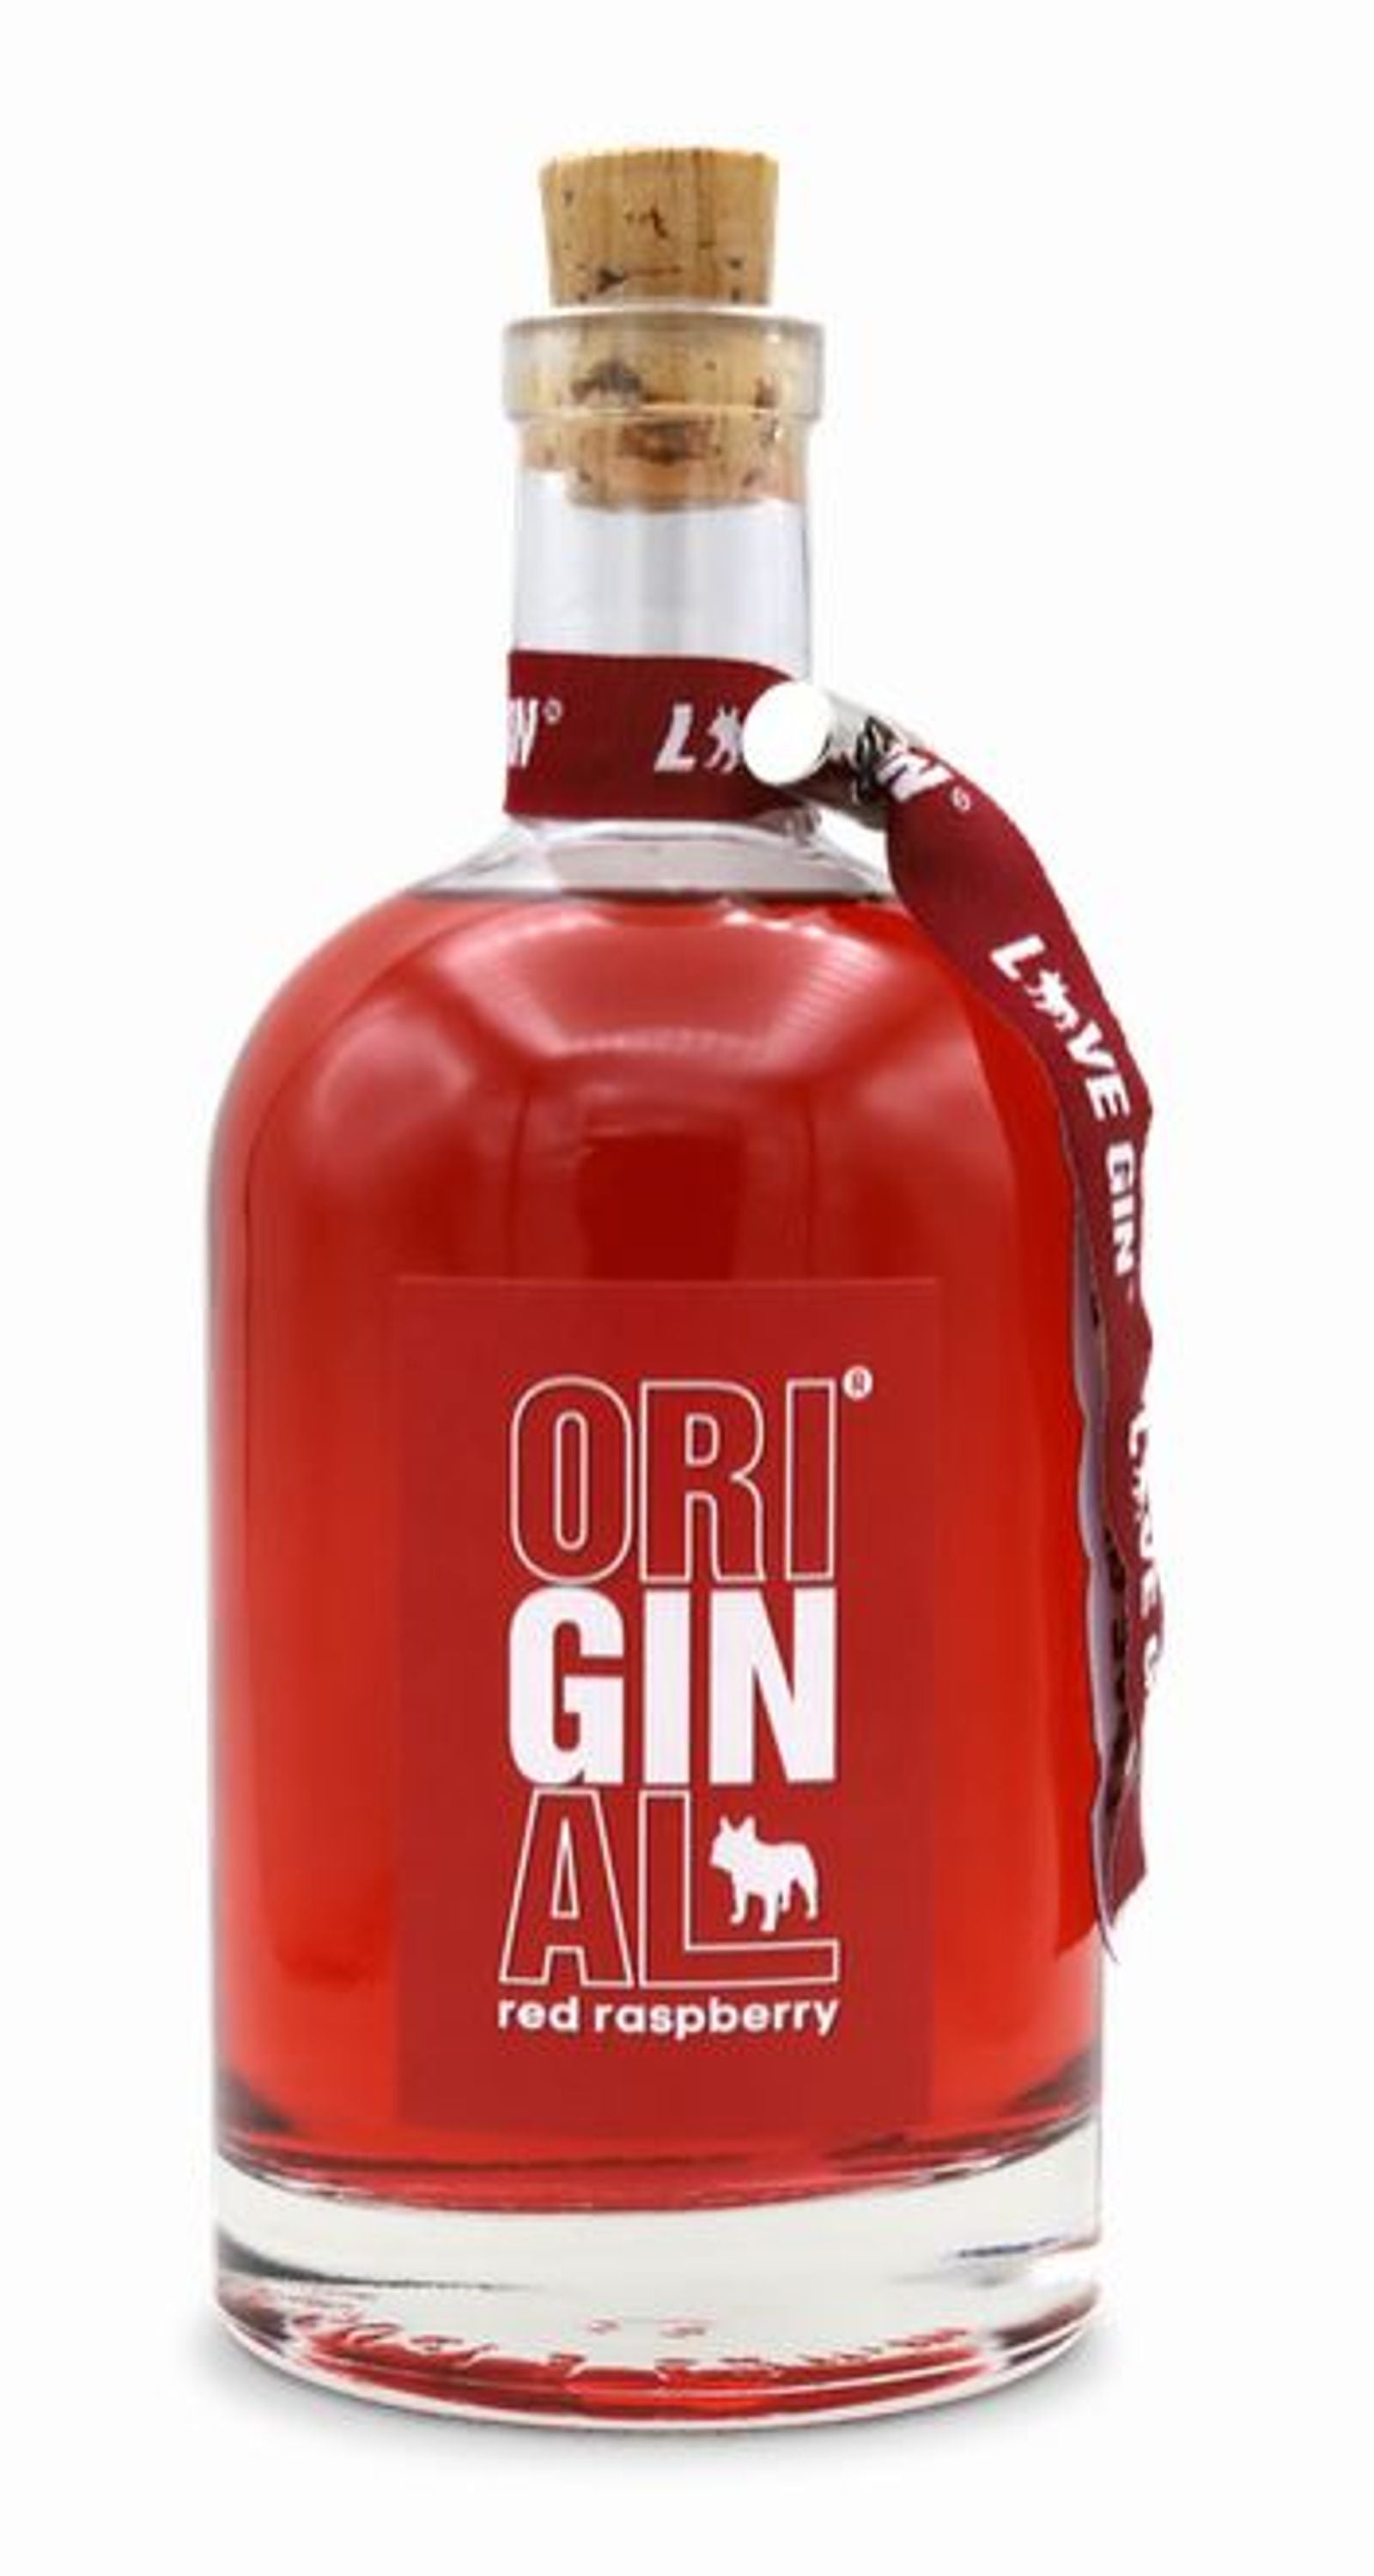 Original Love Gin punainen vadelma 0,5l, alk. 37,5 tilavuusprosenttia, Gin Germany